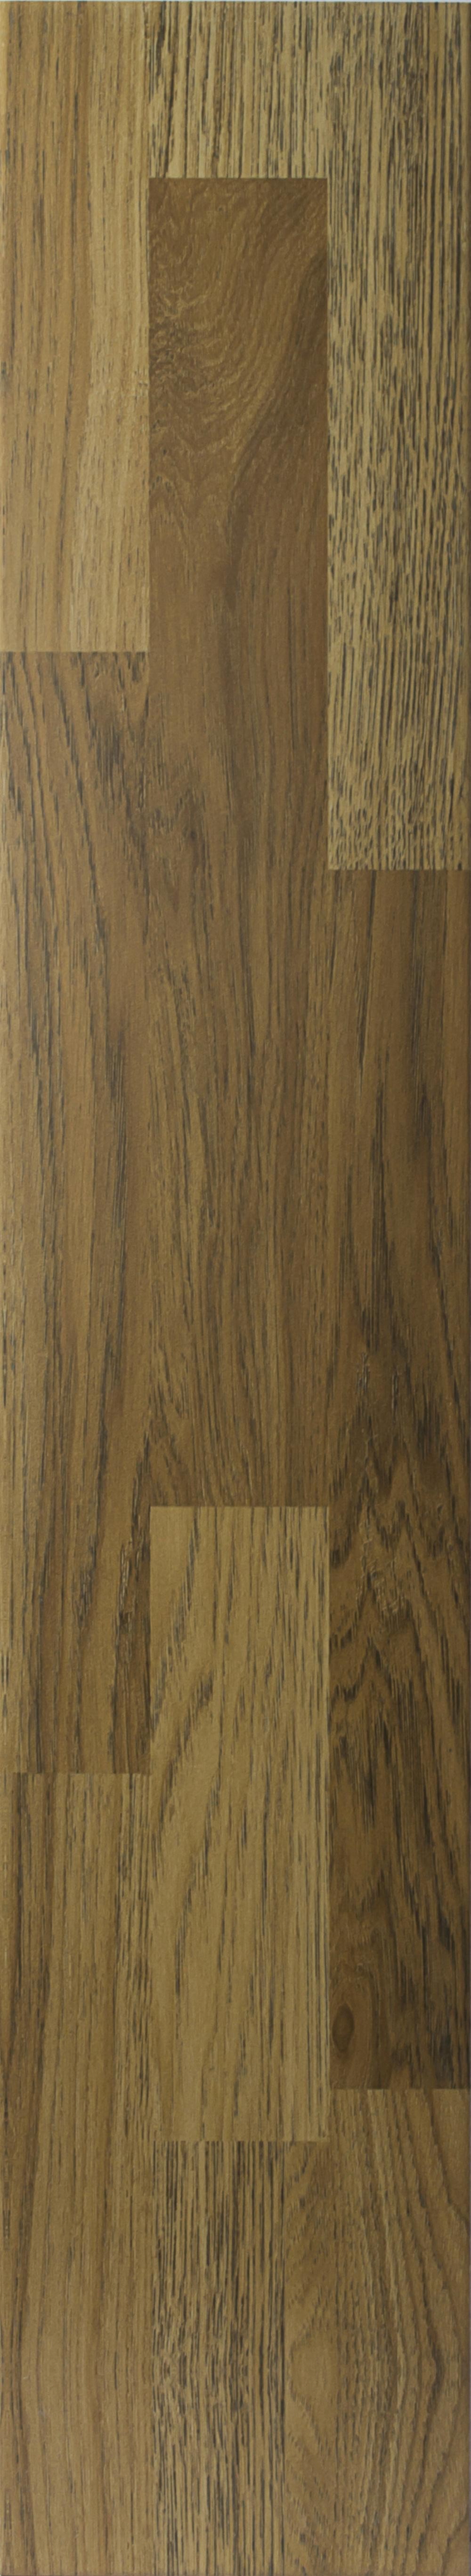 Quality Restaurant Wood Grain Ceramic Floor Tiles For Hotel Lobby Acid - Resistant wholesale